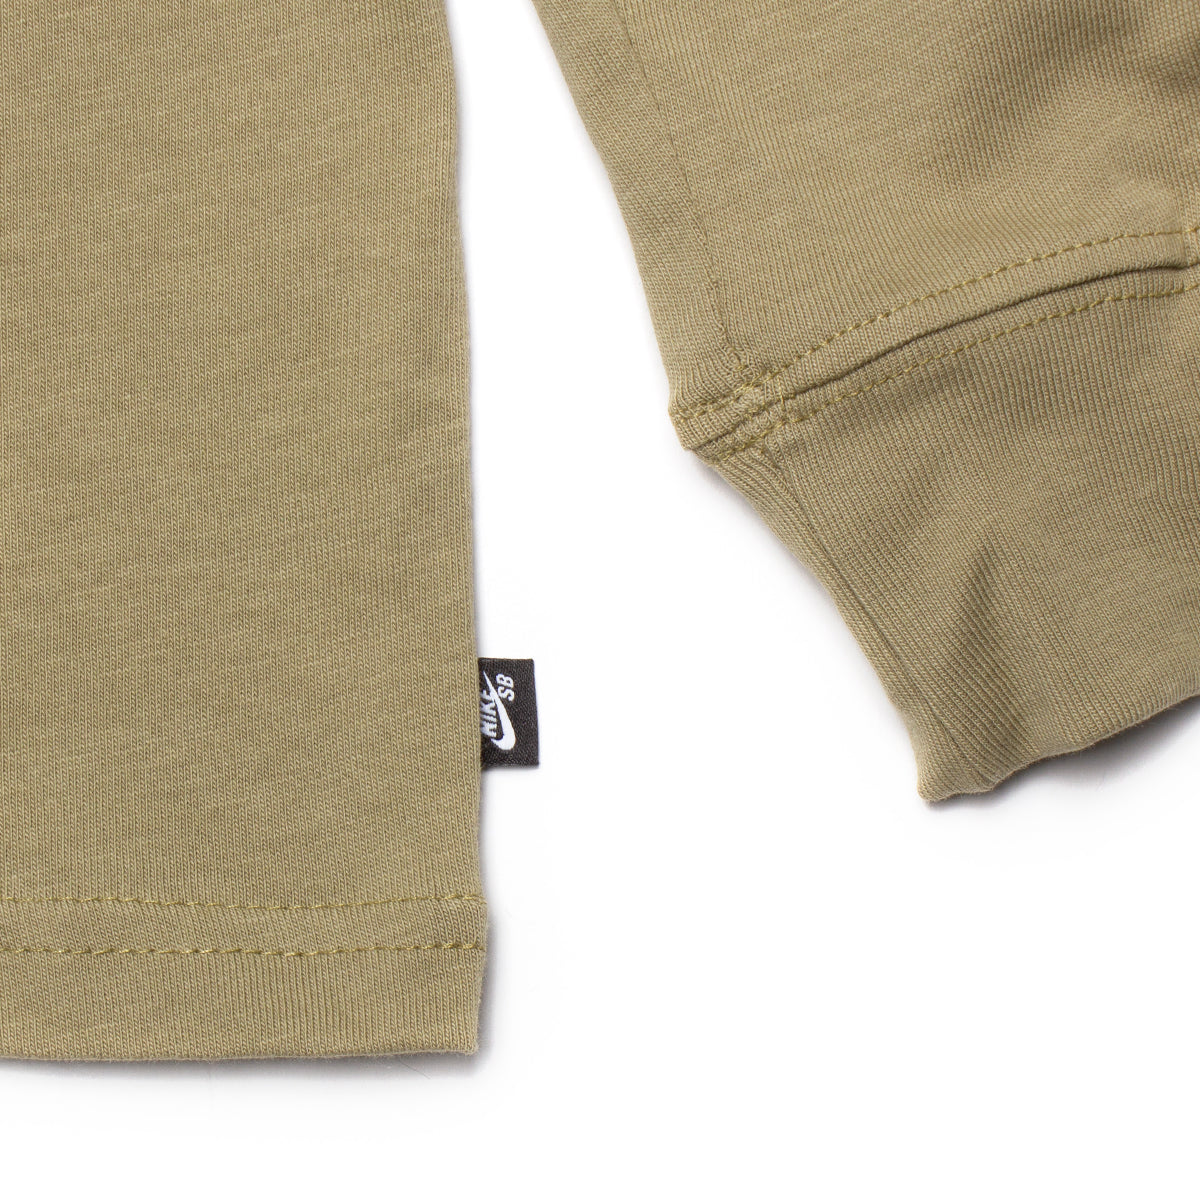 Nike SB Genuine L/S T-Shirt Style # DX9468-276 Color : Neutral Olive